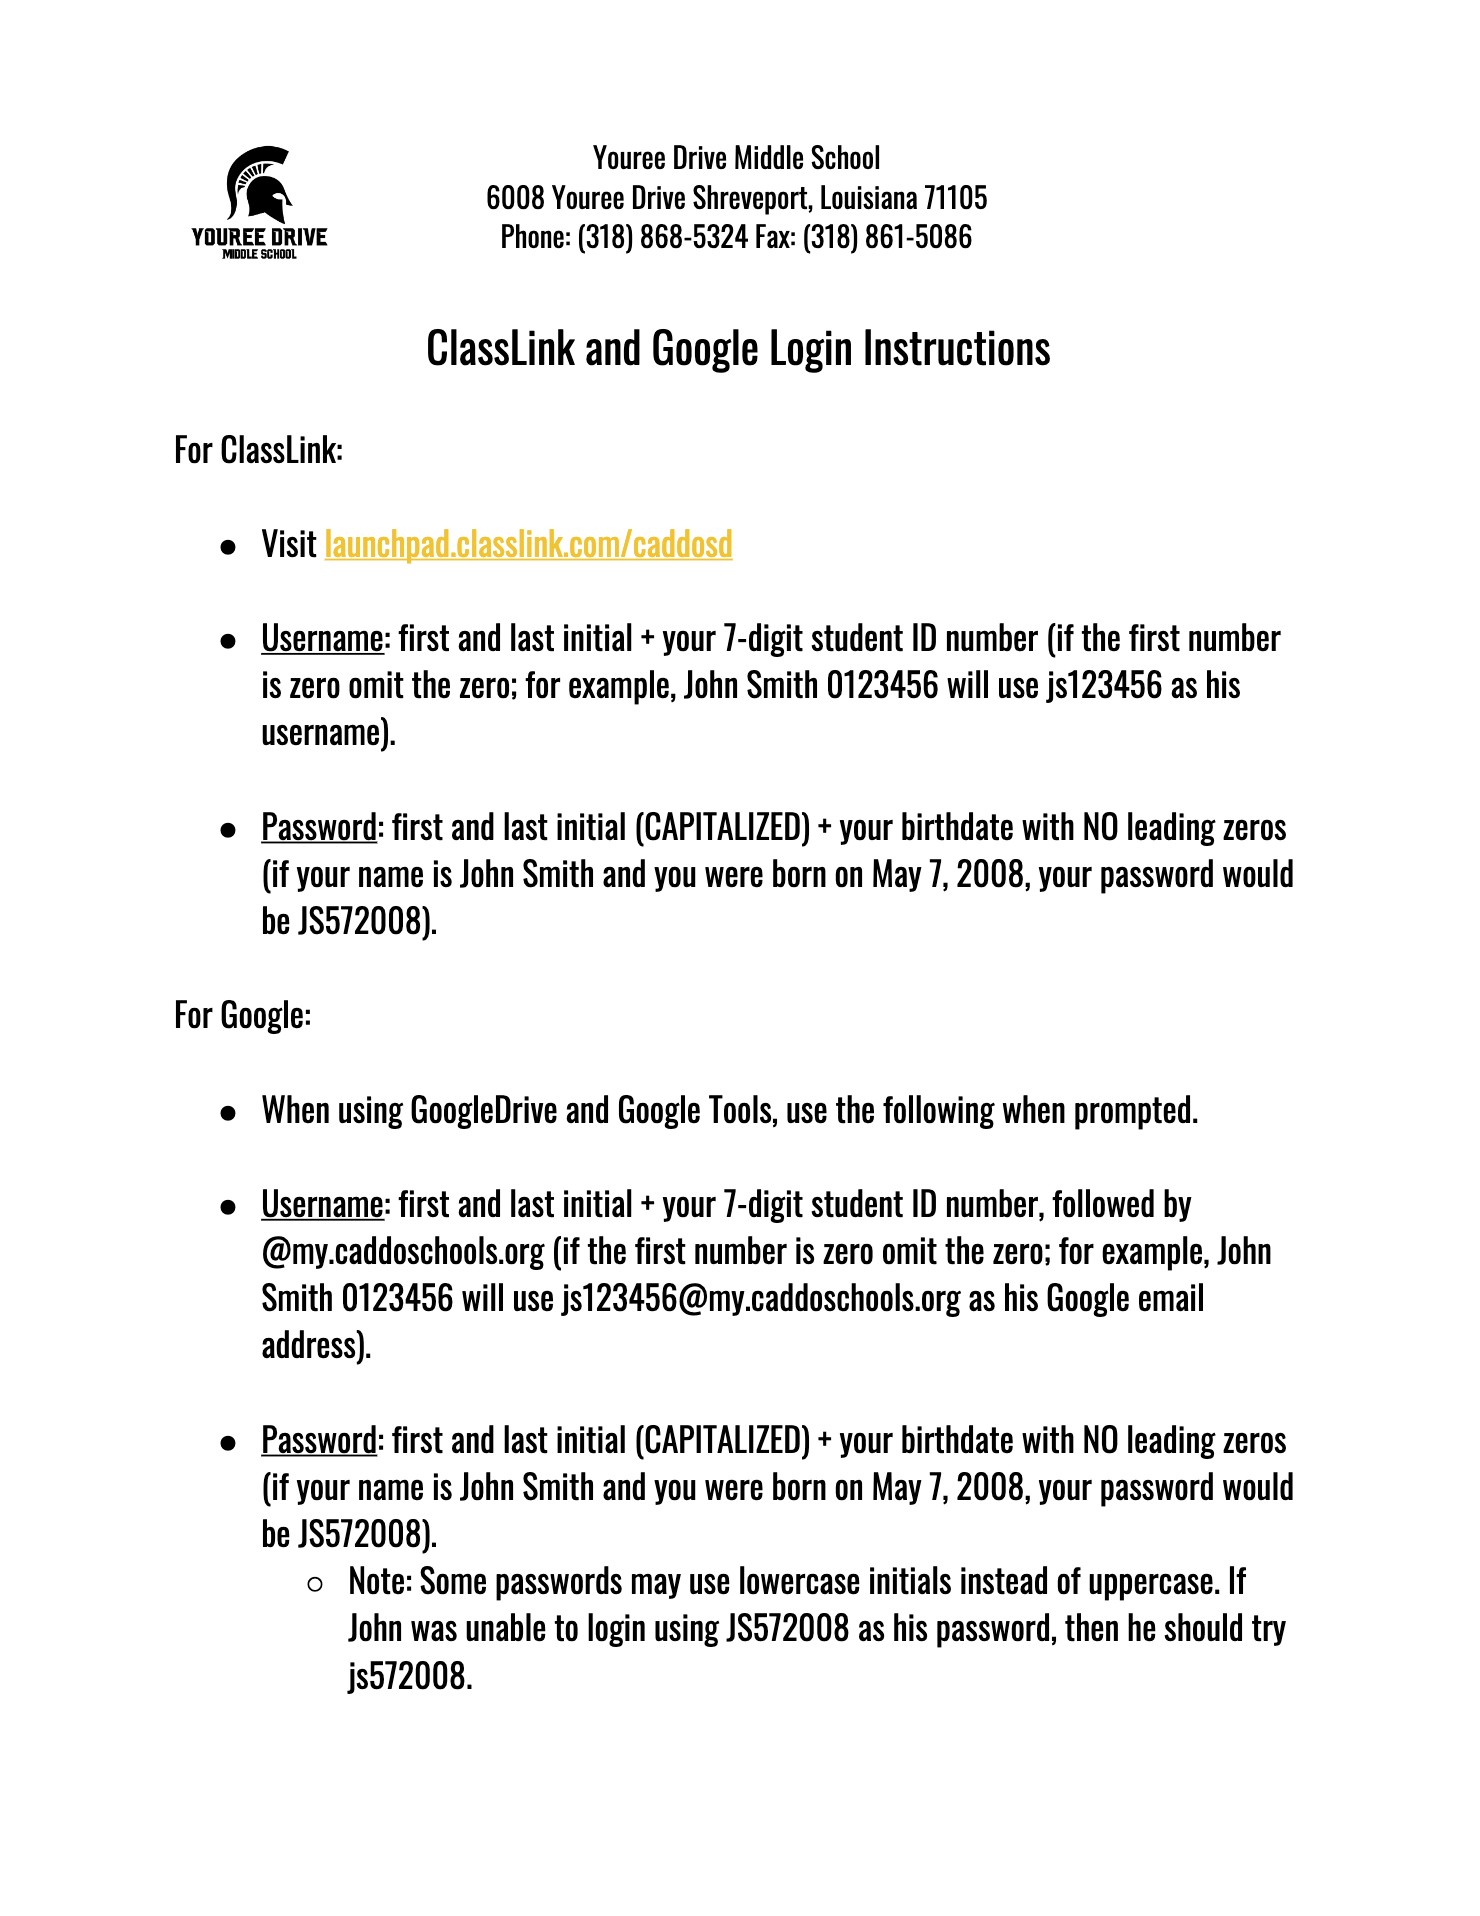 Classlink amp Google Login Instructions Youree Drive Middle Advanced 